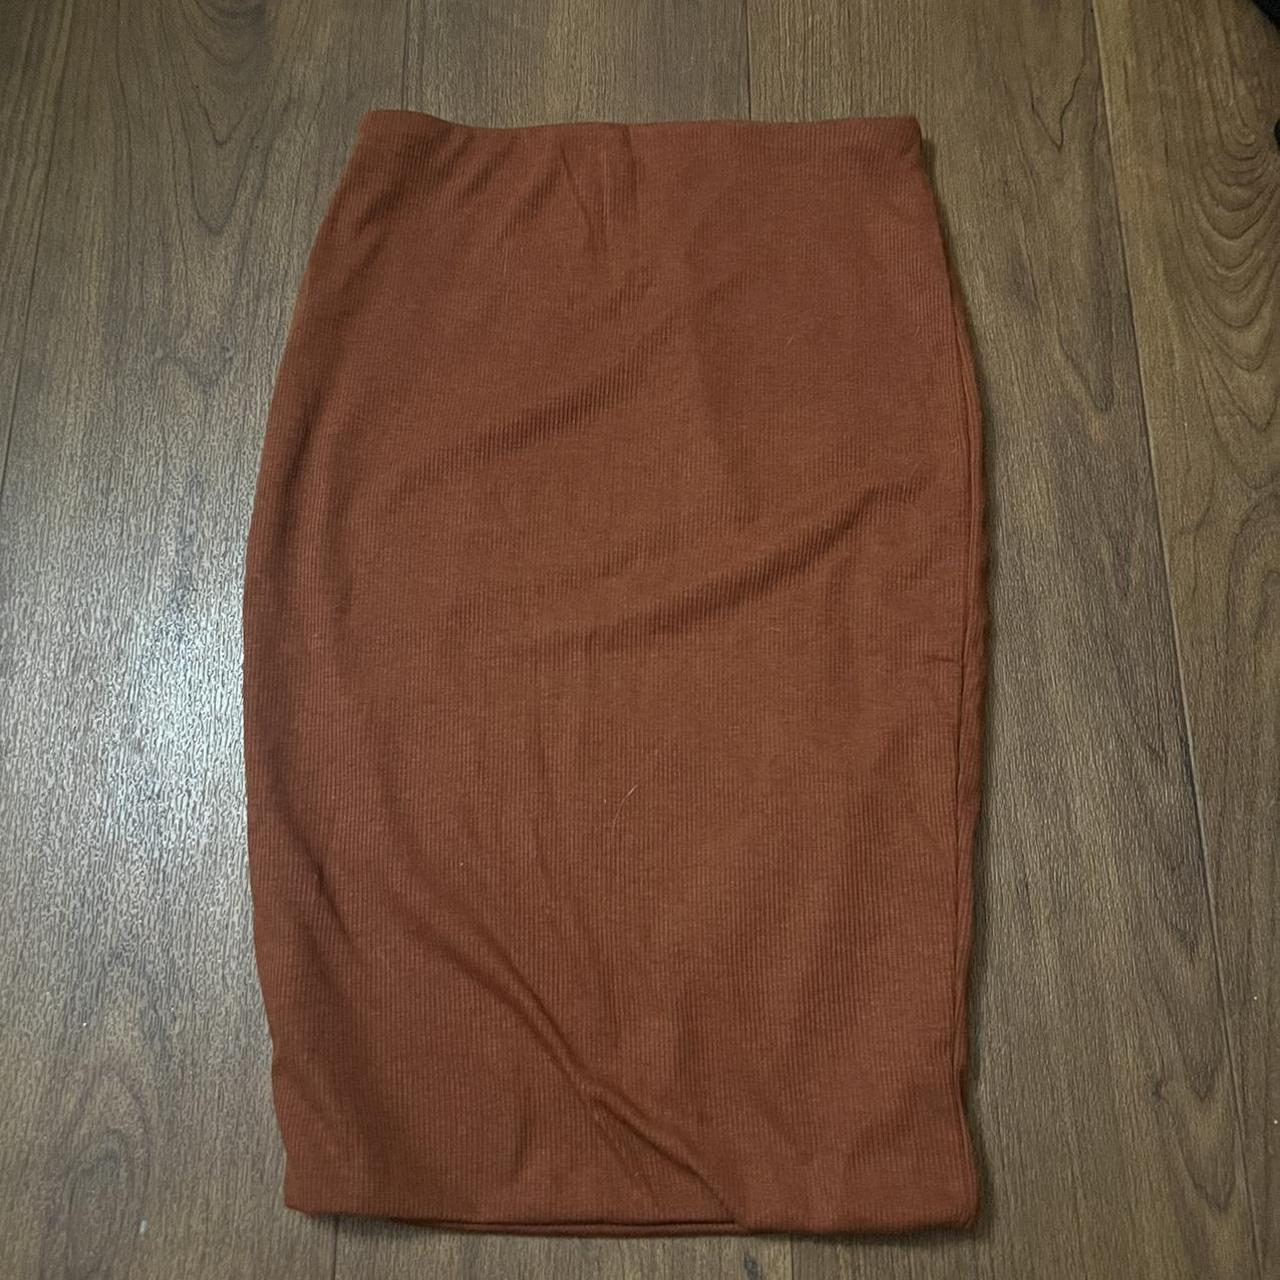 Iris Los Angeles Women's Orange and Brown Skirt